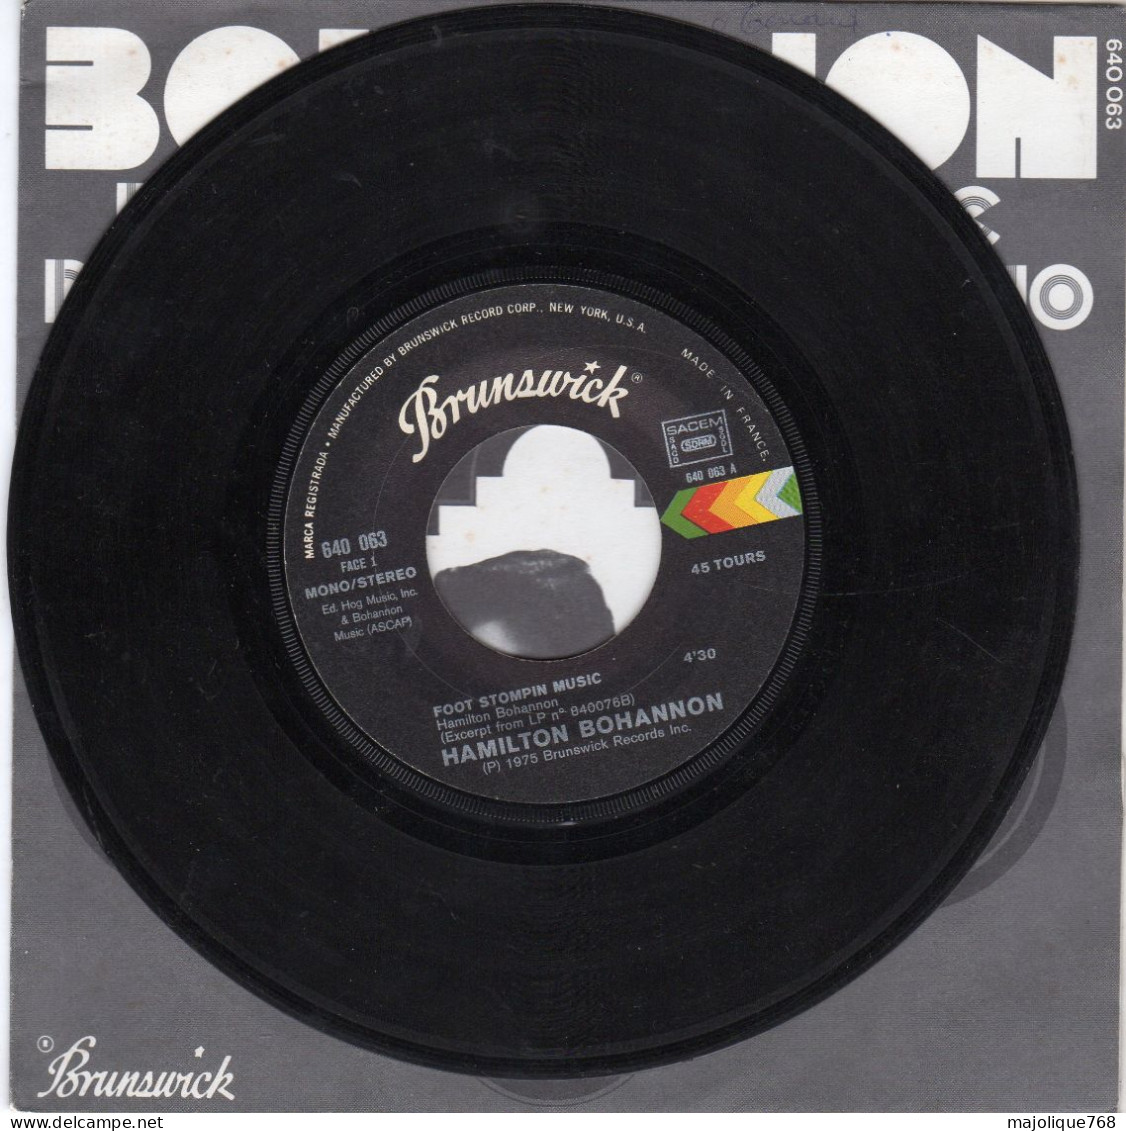 Disque De Hamilton Bohannon - Foot Stompin Music -Brunswick 640063 France 1975 - - Soul - R&B